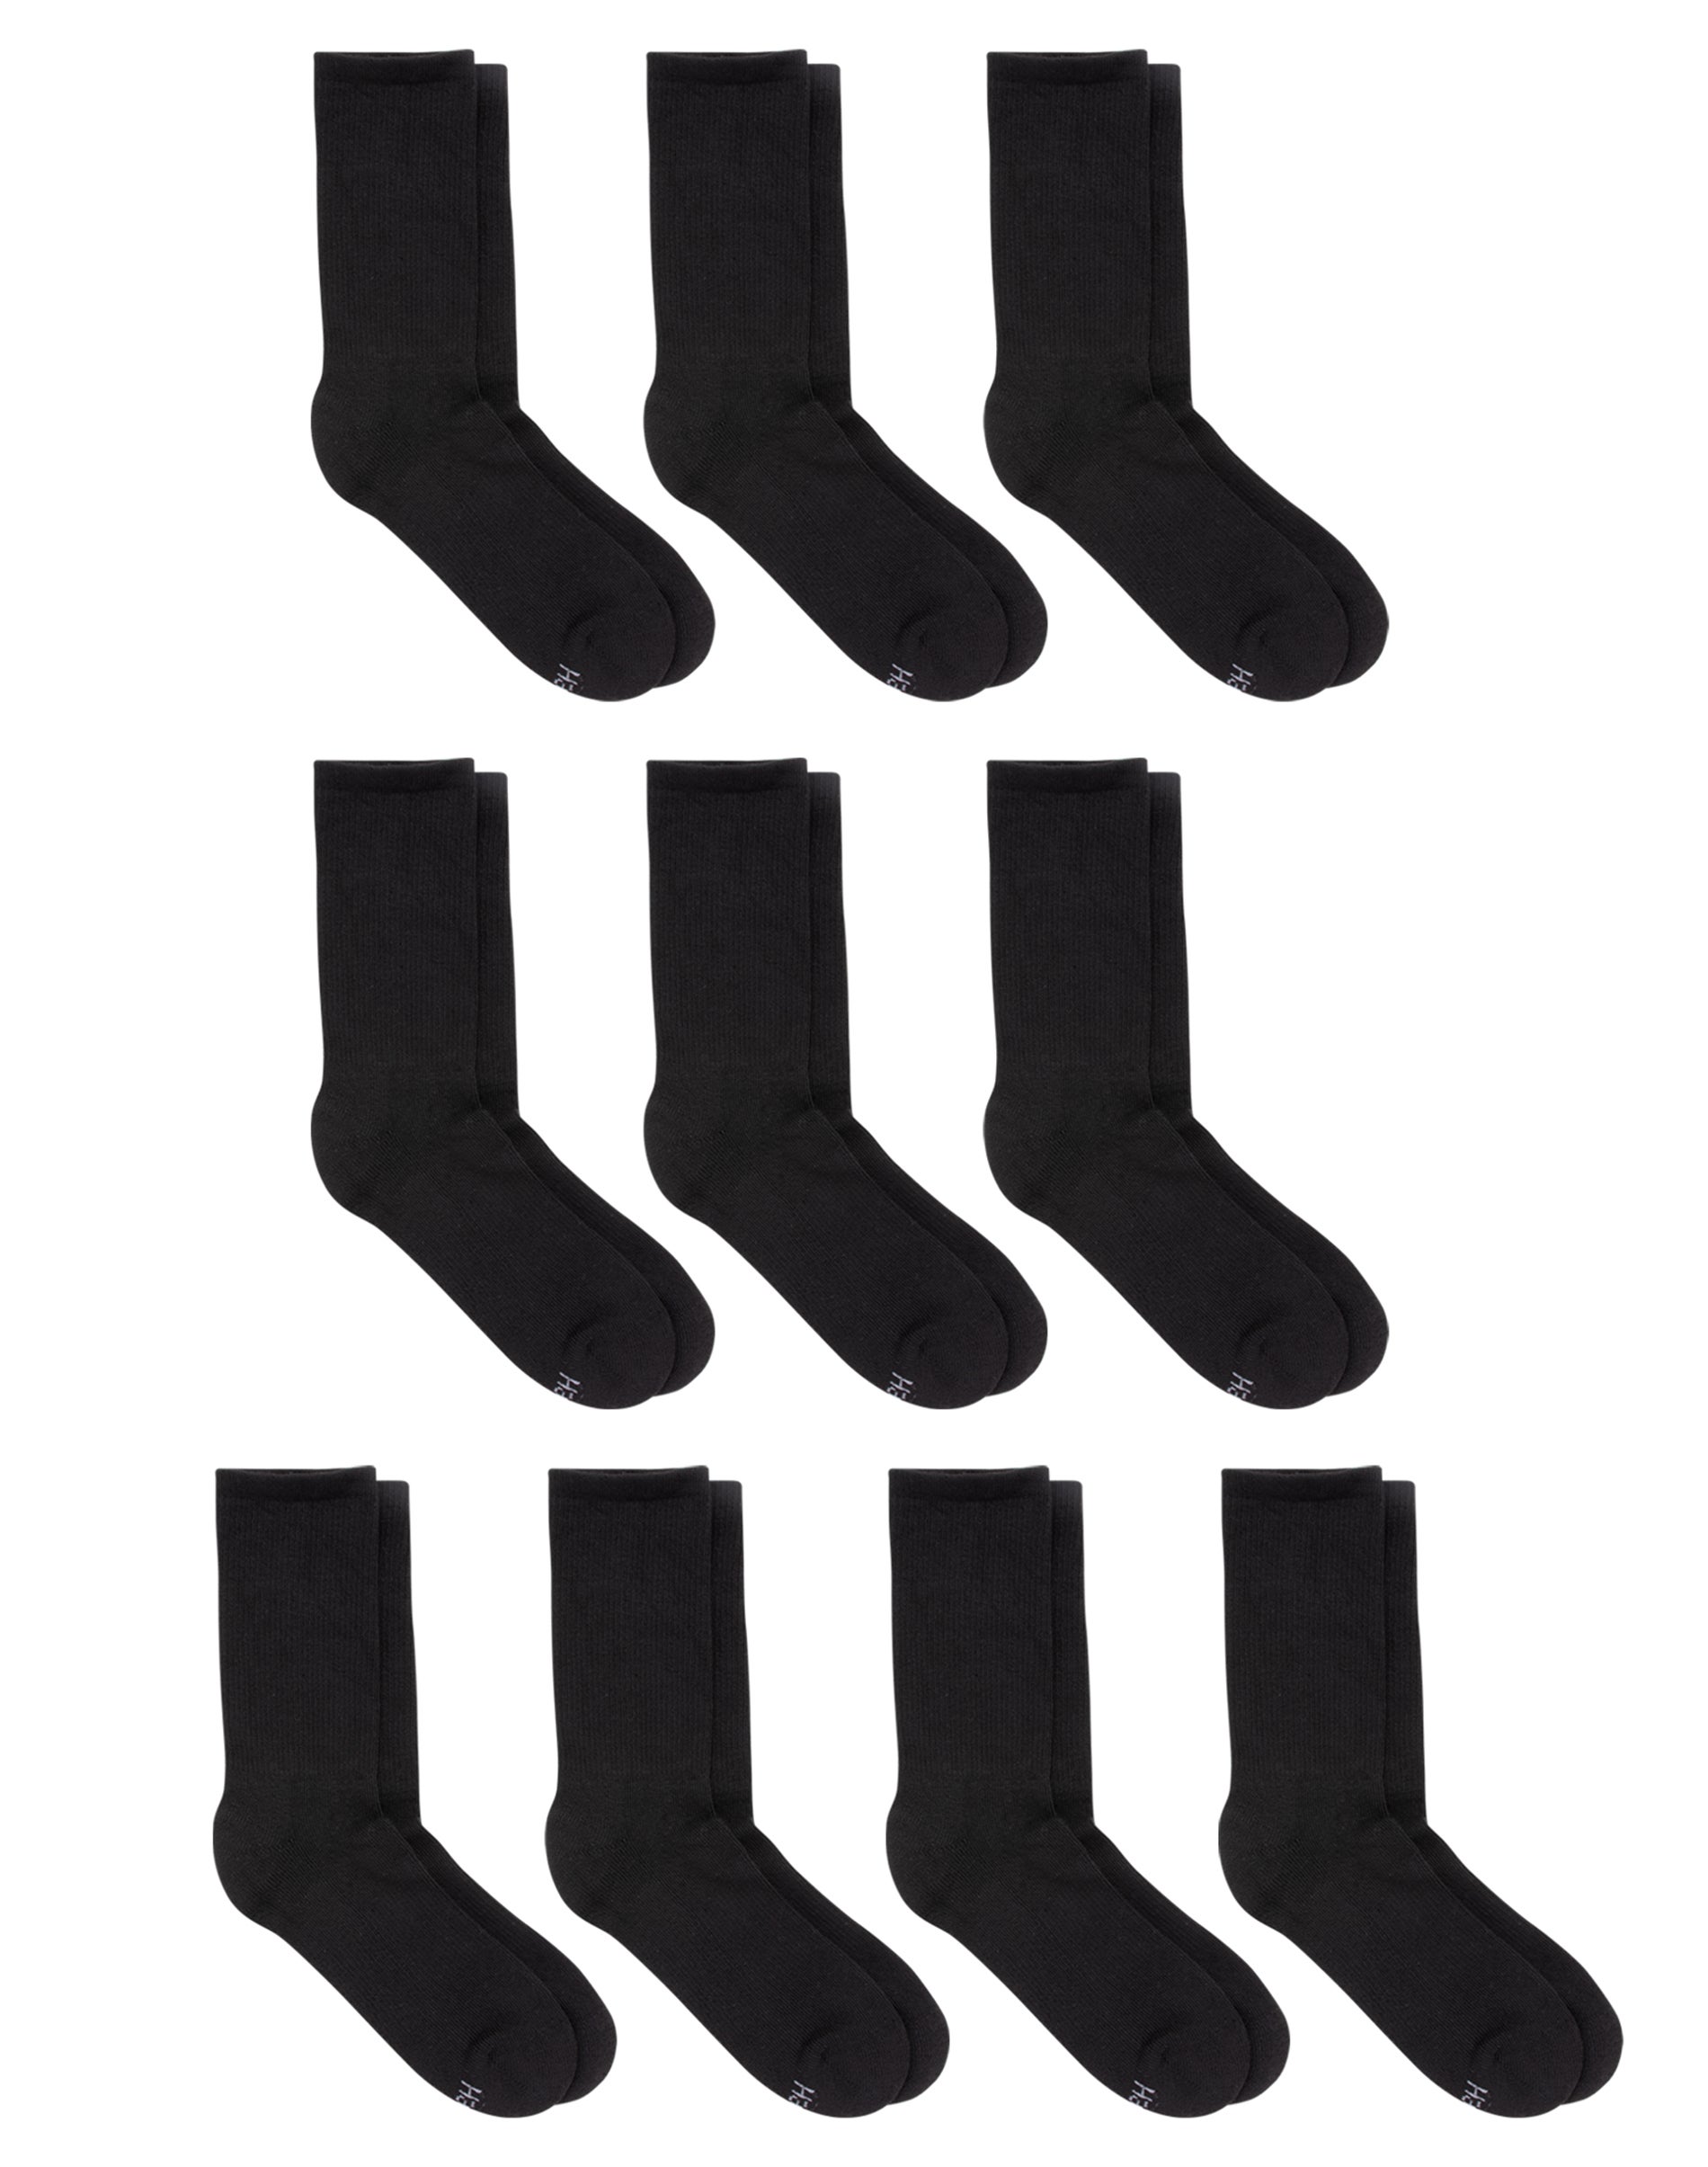 Hanes Boys' Double Tough Durability Crew Socks 10-Pack